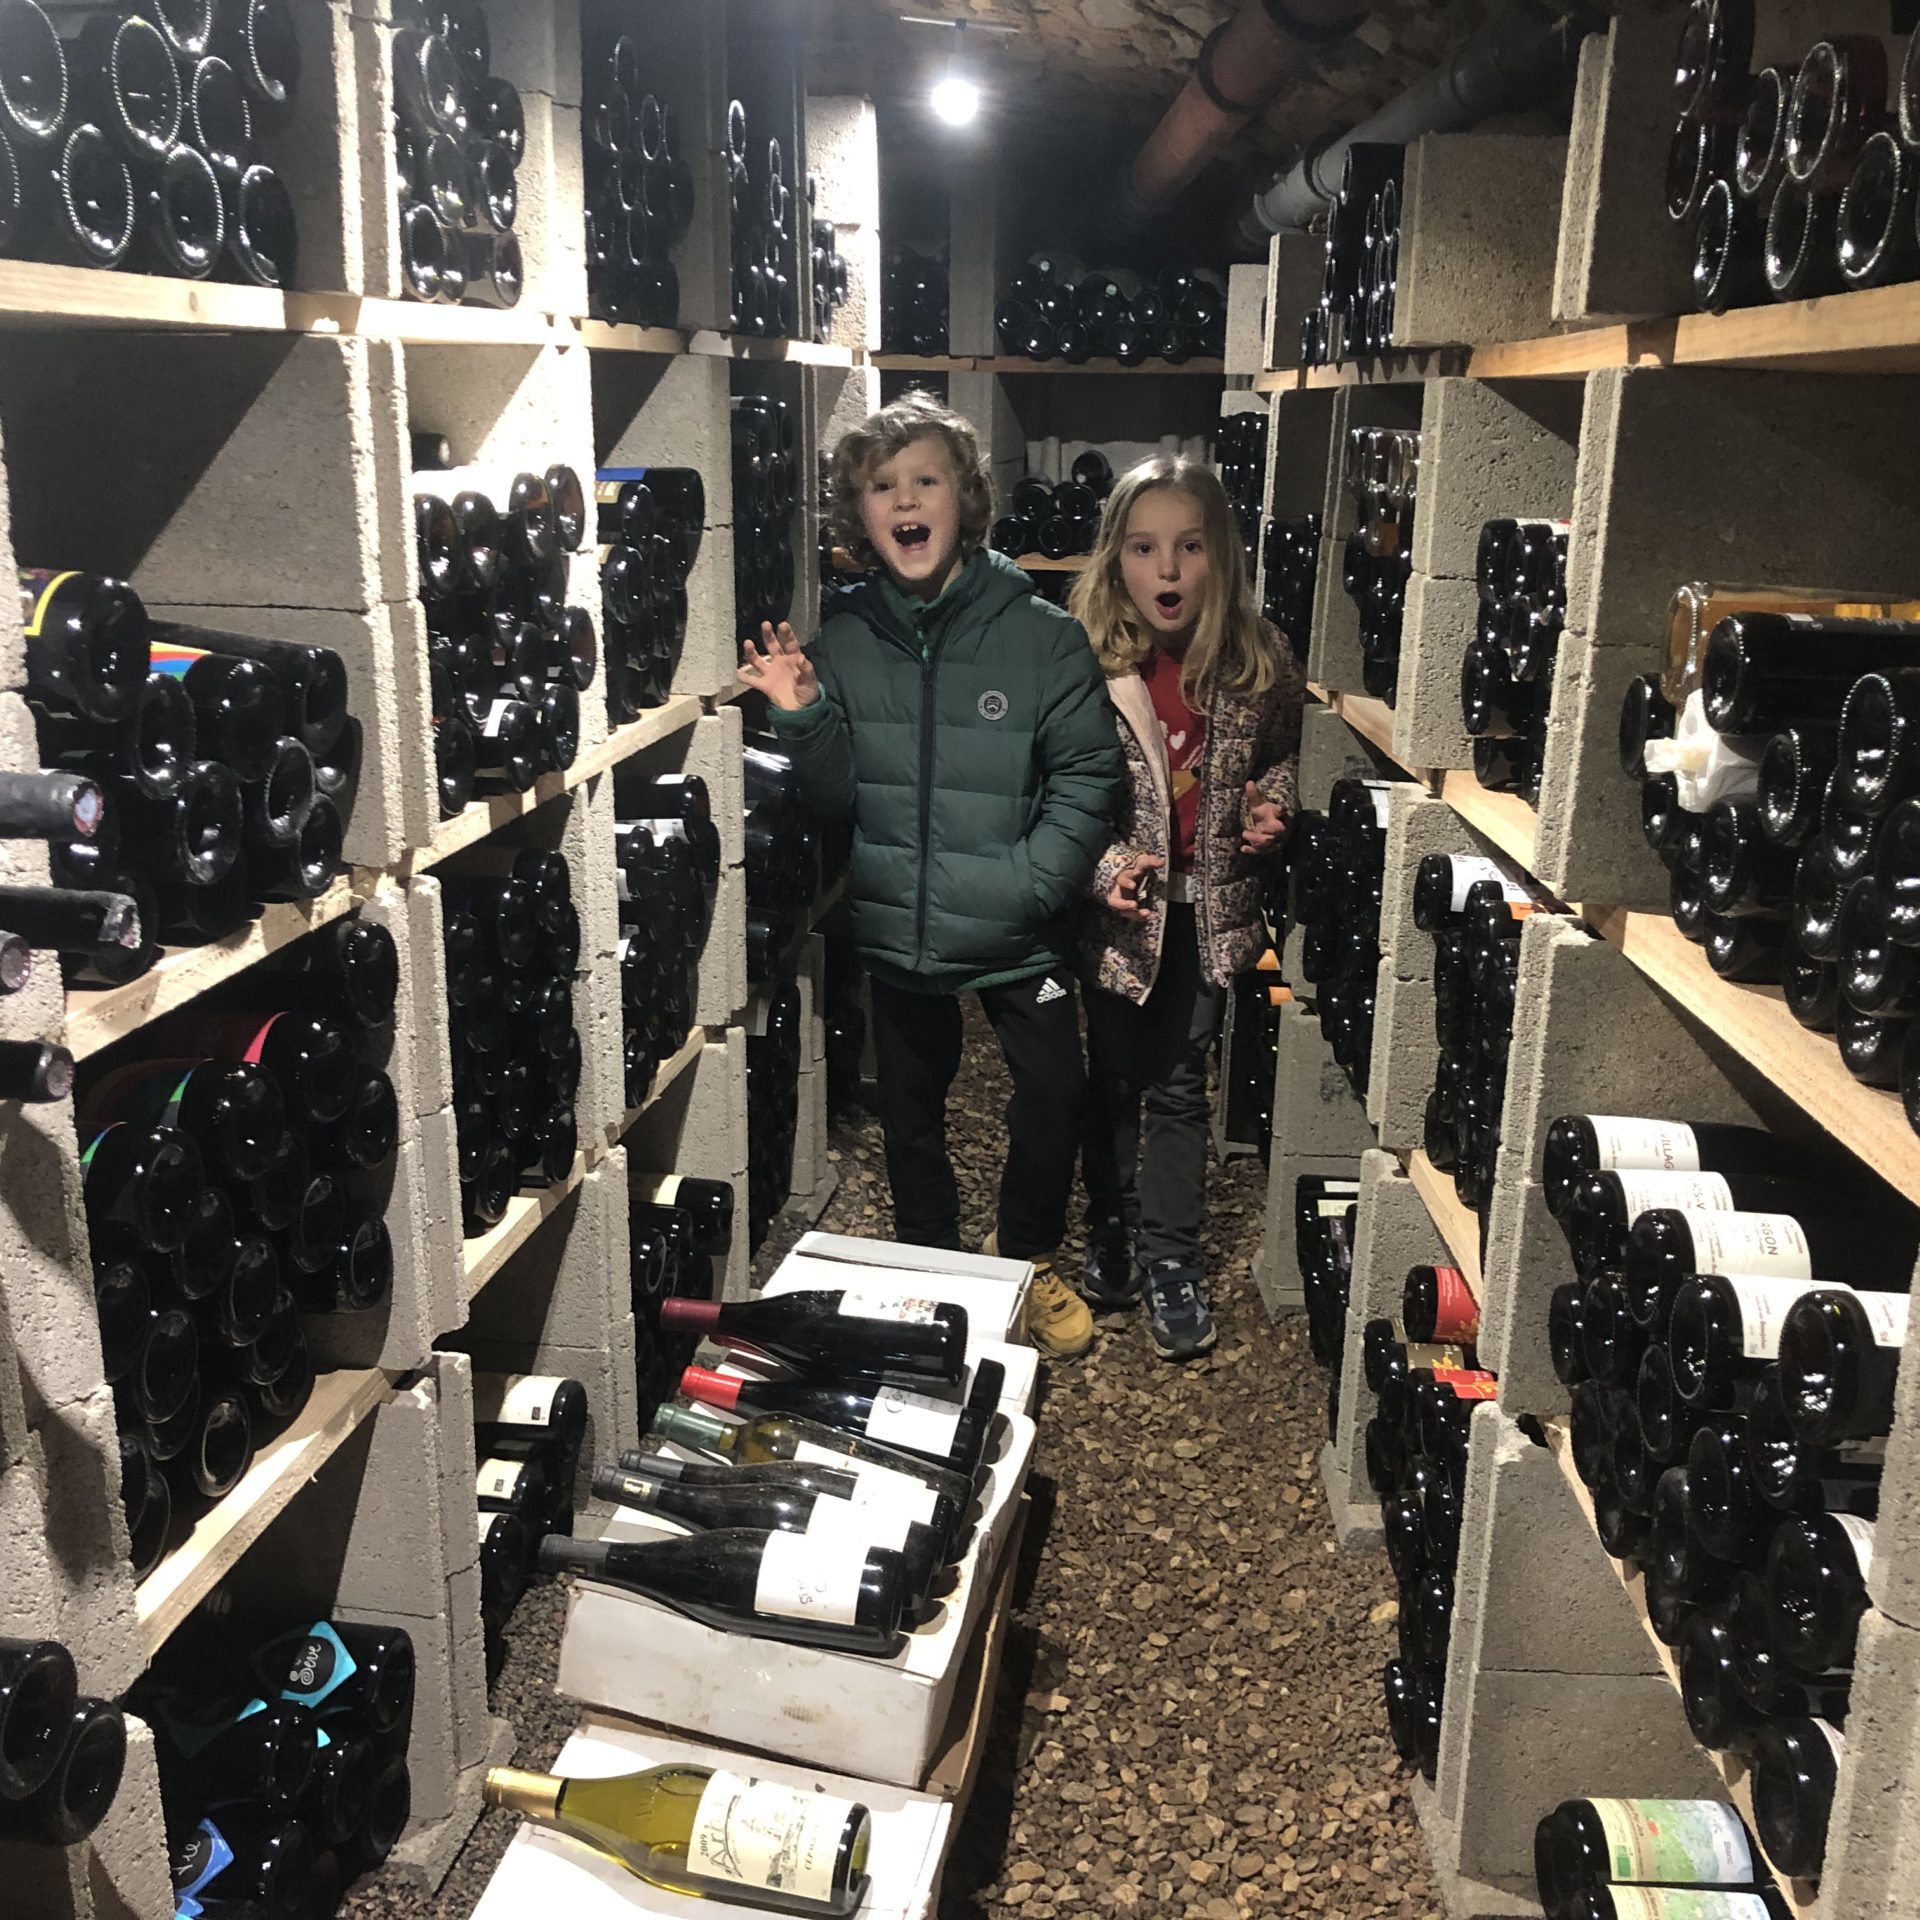 Inside André's wine cellar